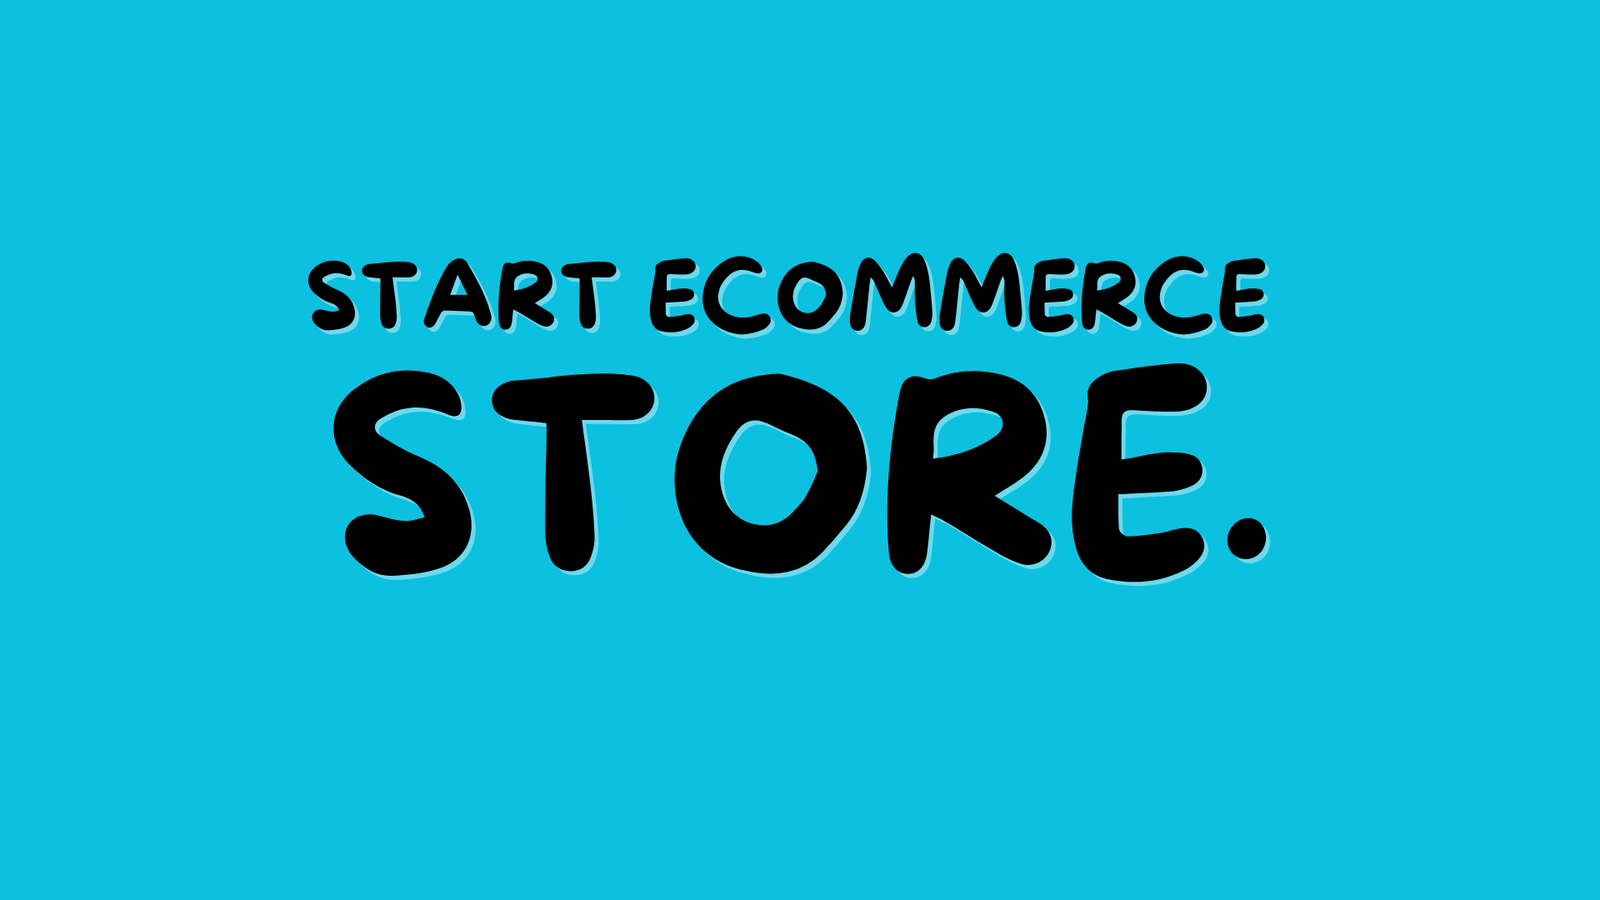 Start ecommerce store